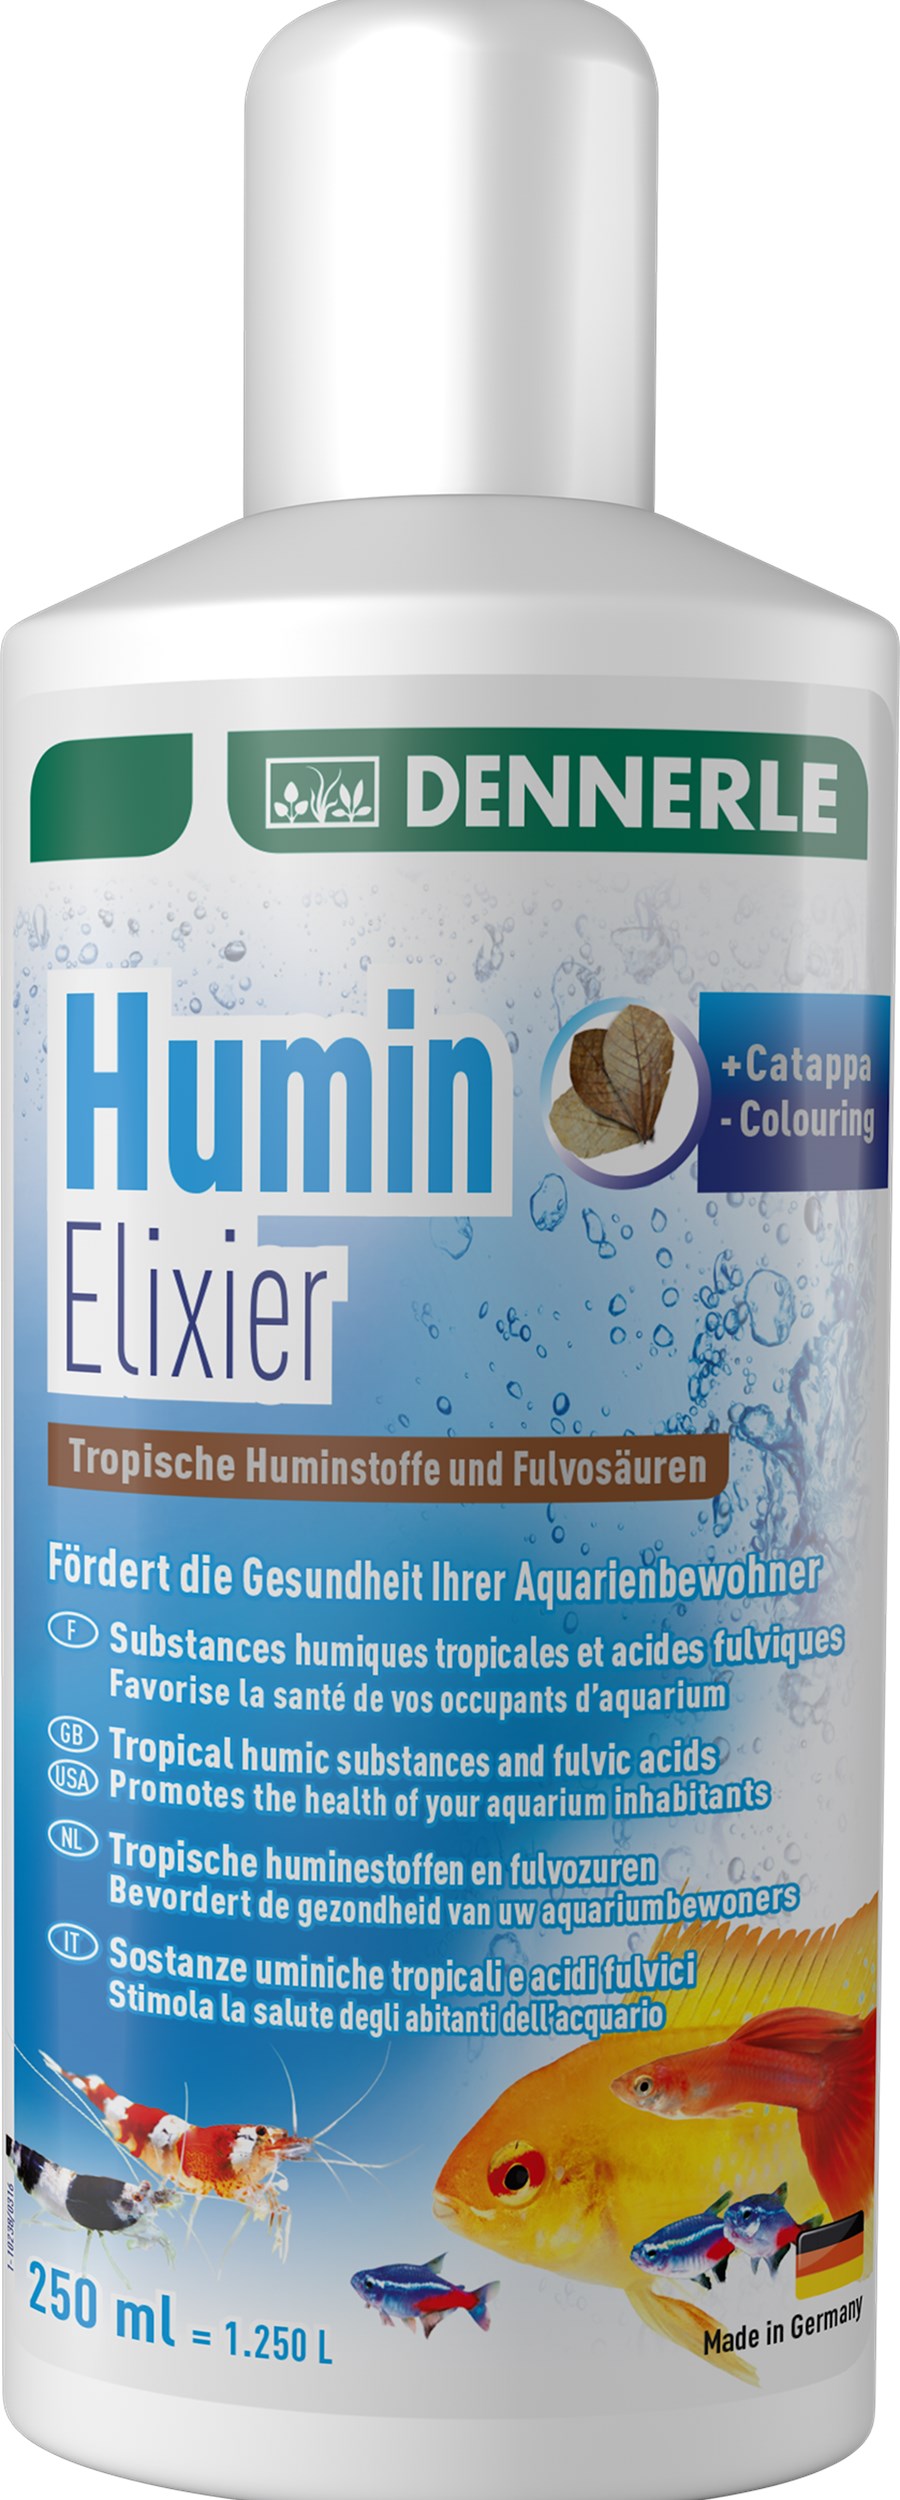 Humin Elixier 250 ml